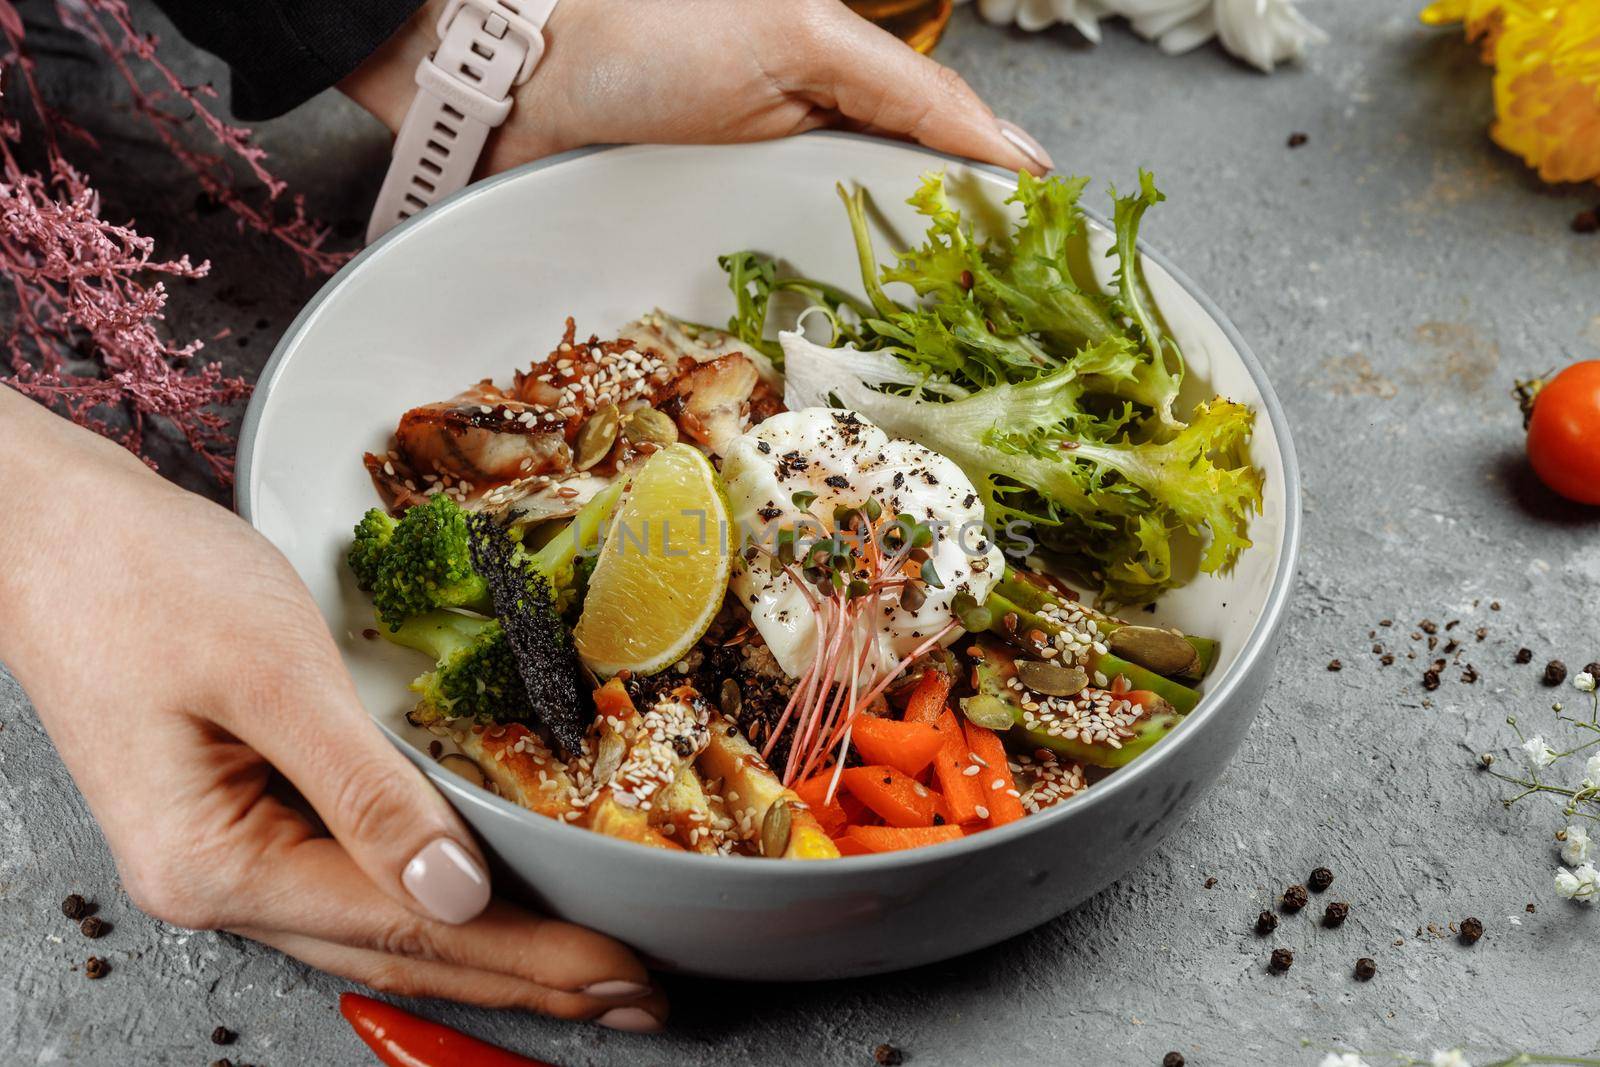 Healthy bowl - quinoa salad with tuna, broccoli, avocado on wooden rustic table. top view.